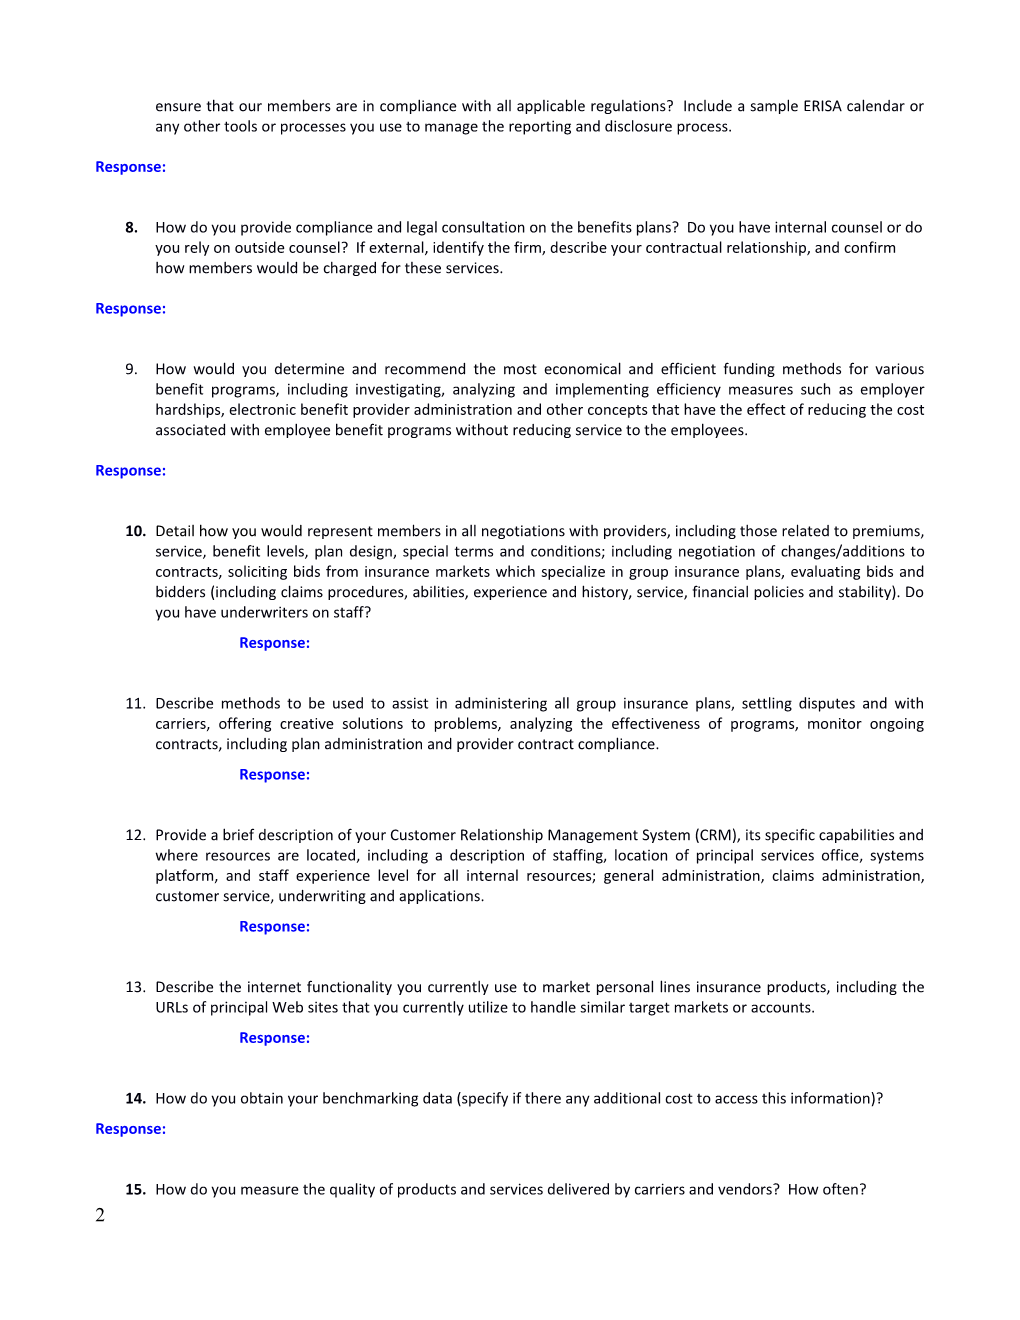 Attachment C: Detailed Business Requirements Questionnaire